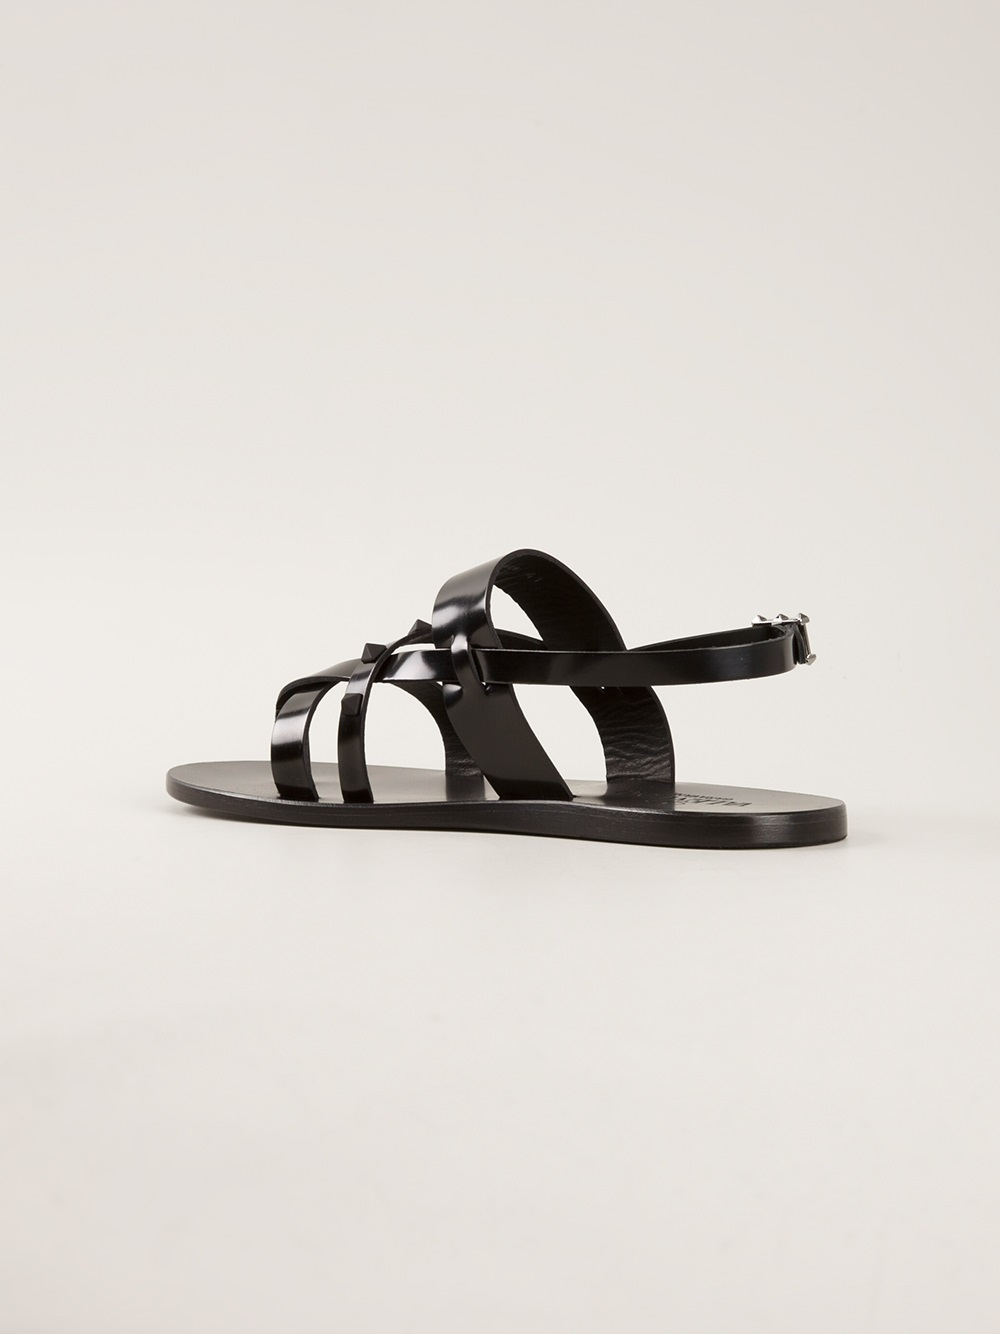 Lyst - Valentino Rockstud Sandals in Black for Men